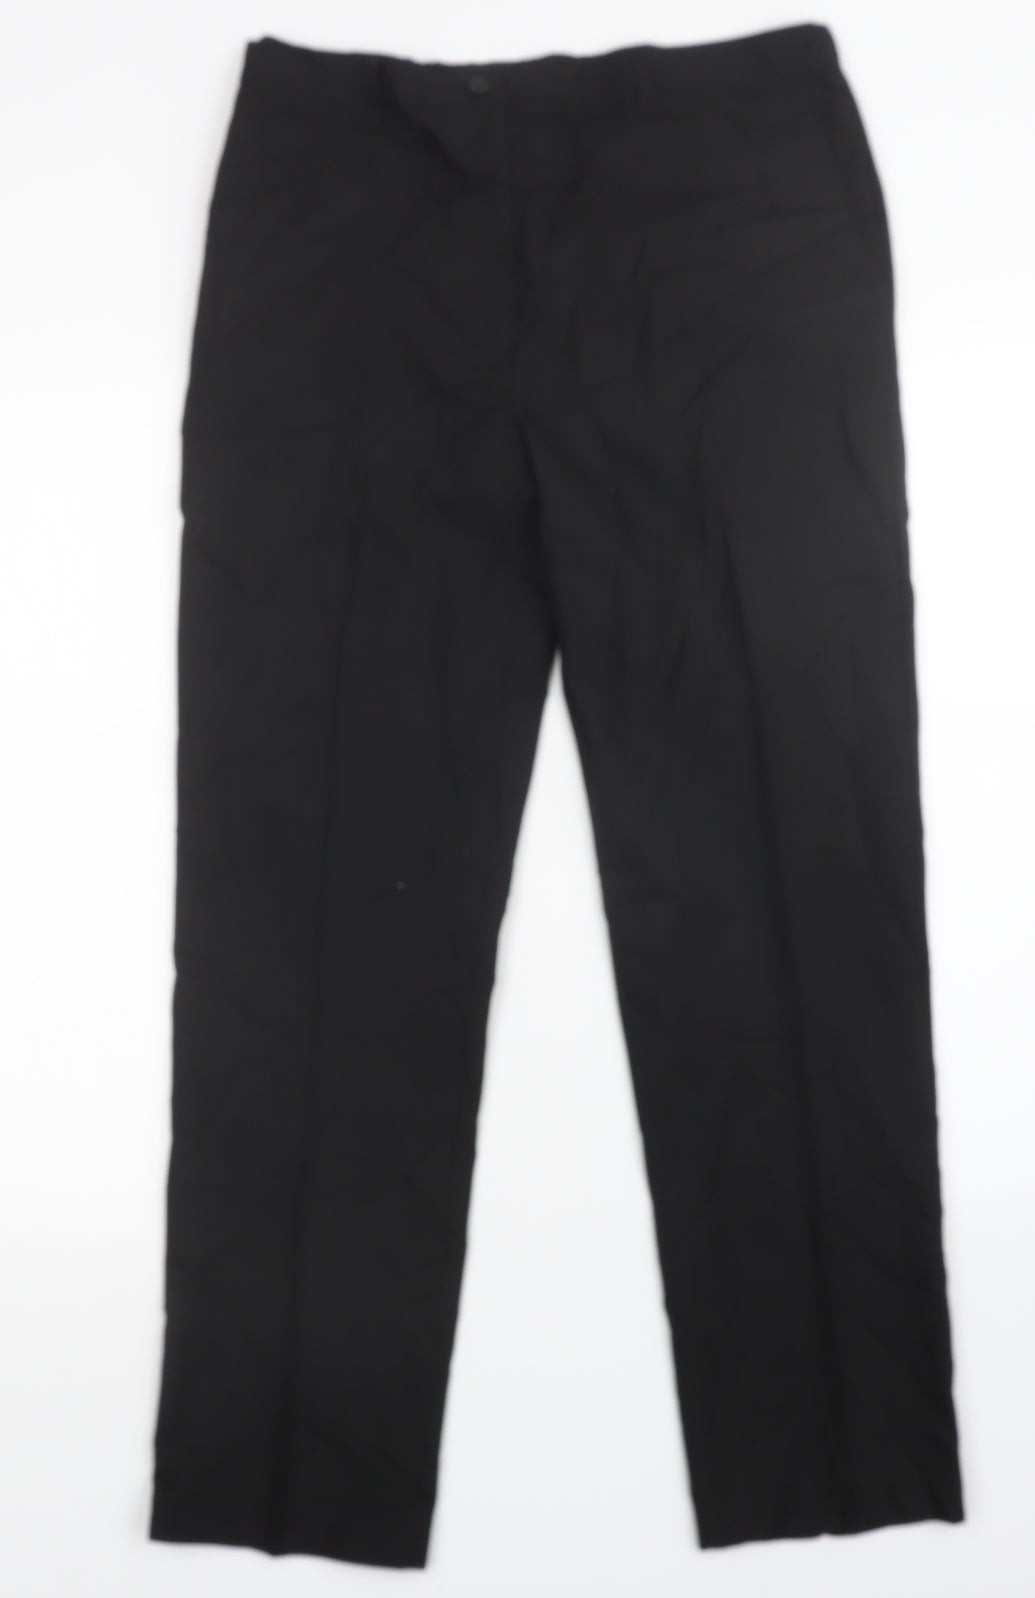 George Boys Black Polyester Dress Pants Trousers Size 45 Years Regular   eBay